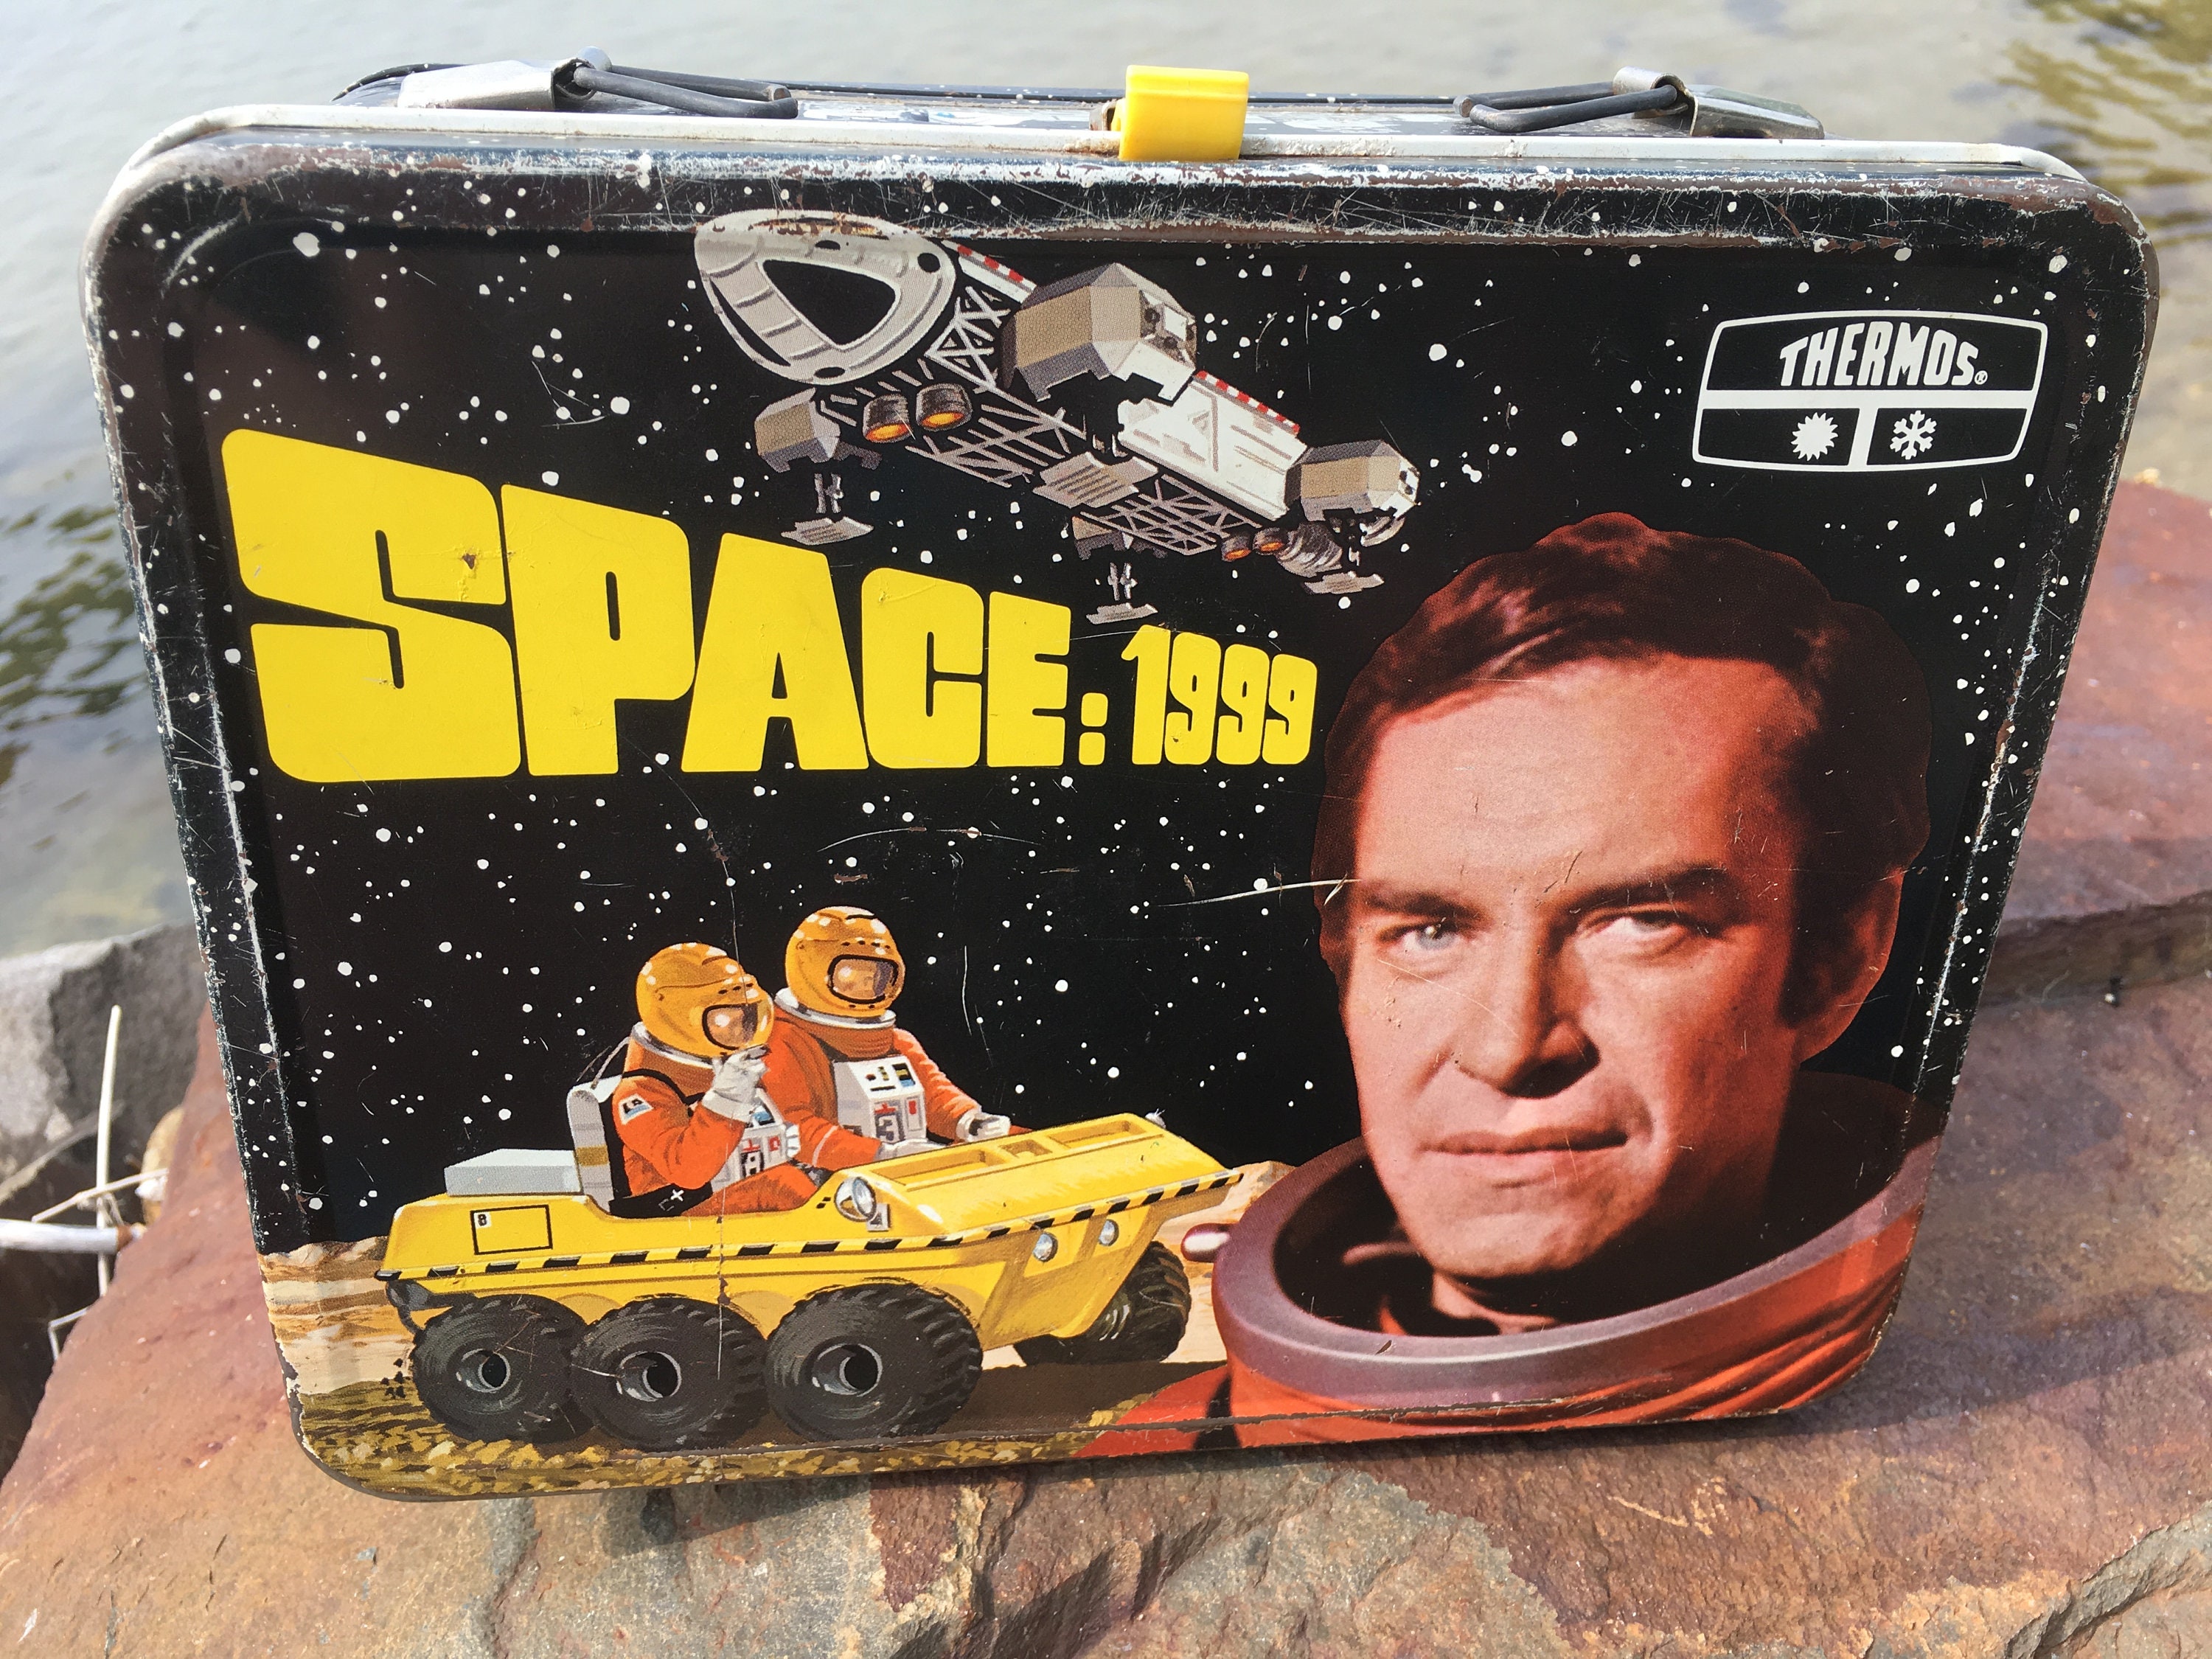 Star Wars Children Tin Lunch Box A Long Time Ago In A Galaxy Far, Far Away  Solo